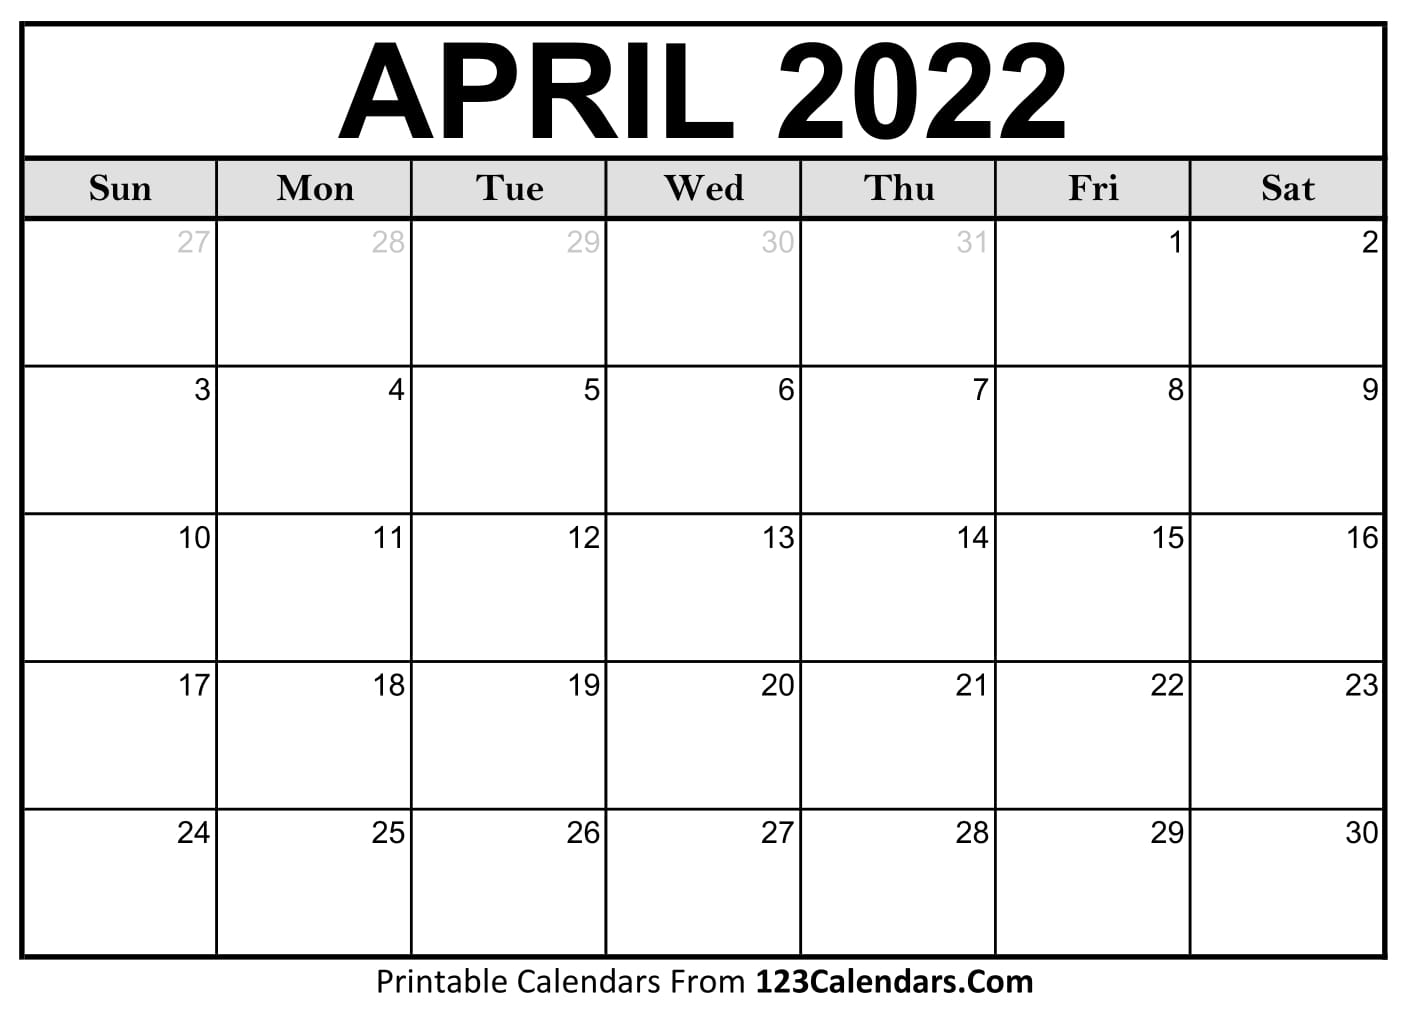 Printable Calendar April 2022 Printable April 2022 Calendar Templates - 123Calendars.com